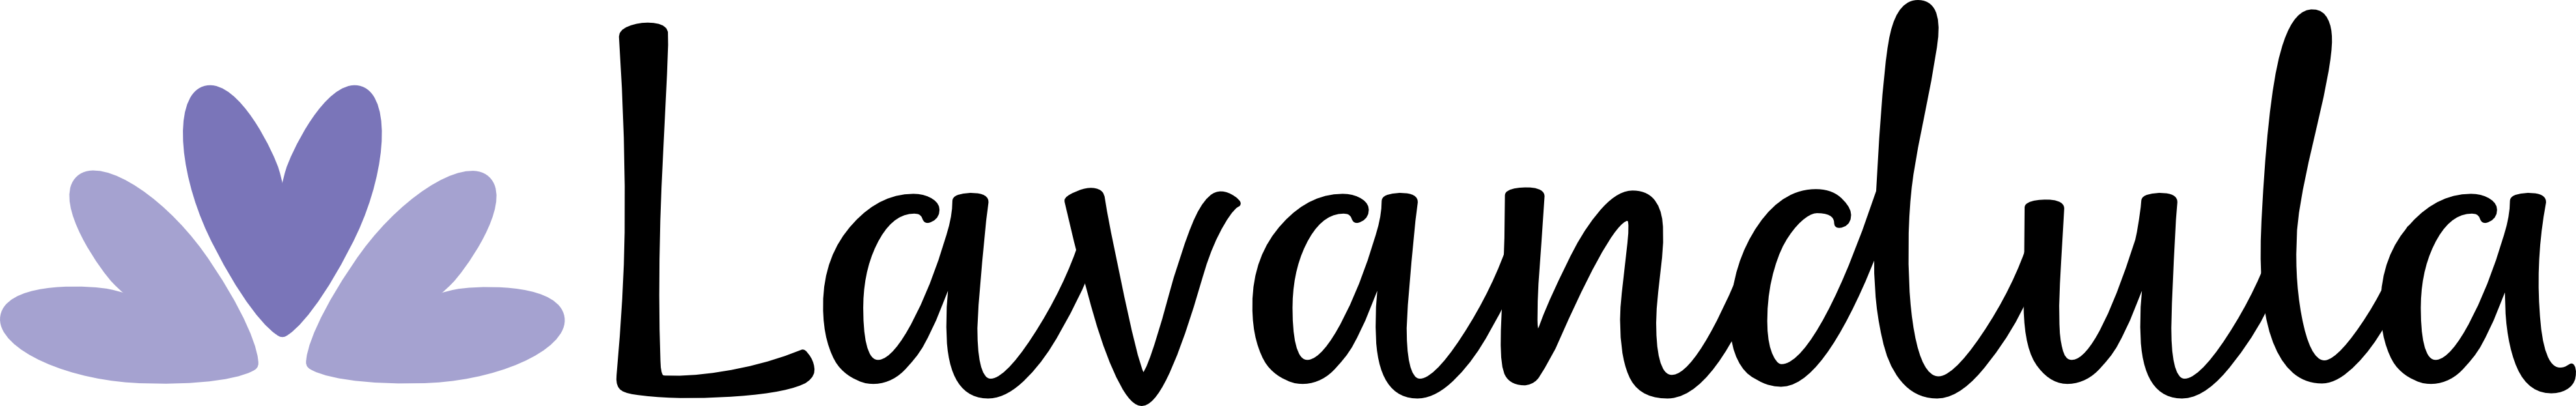 Lavandula-väritesti-koko-logo